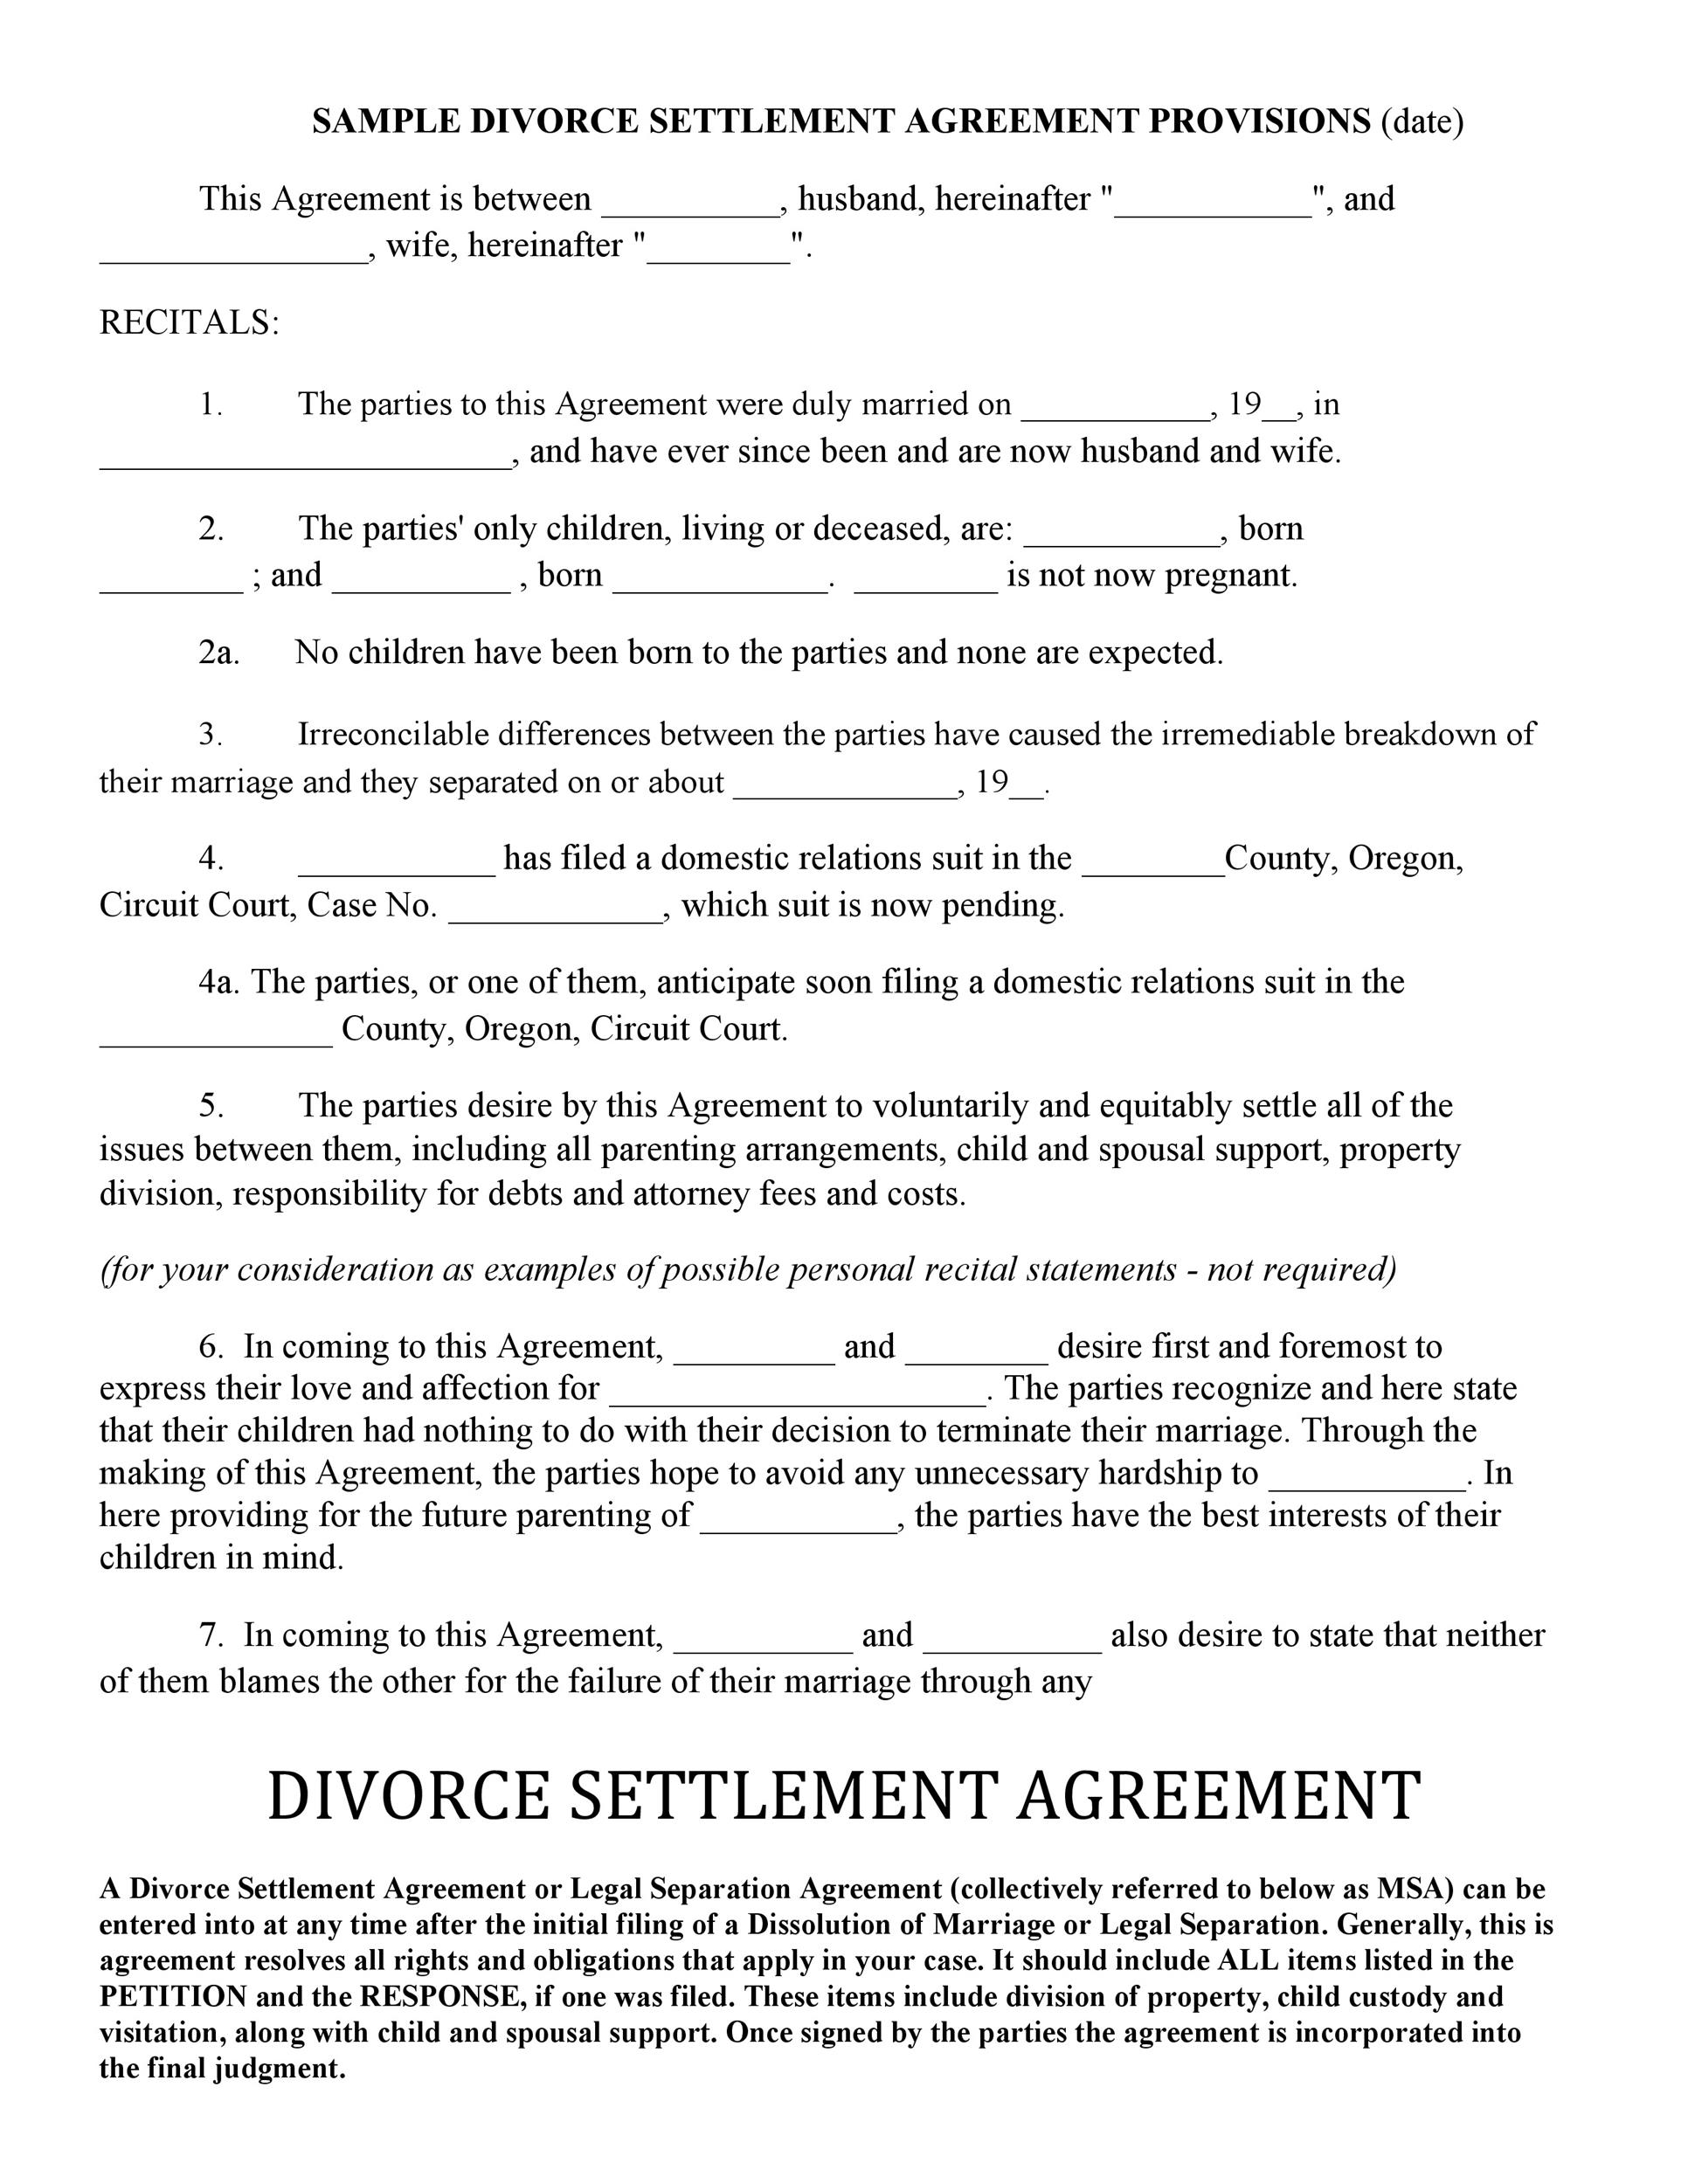 acuerdo de divorcio gratis 40